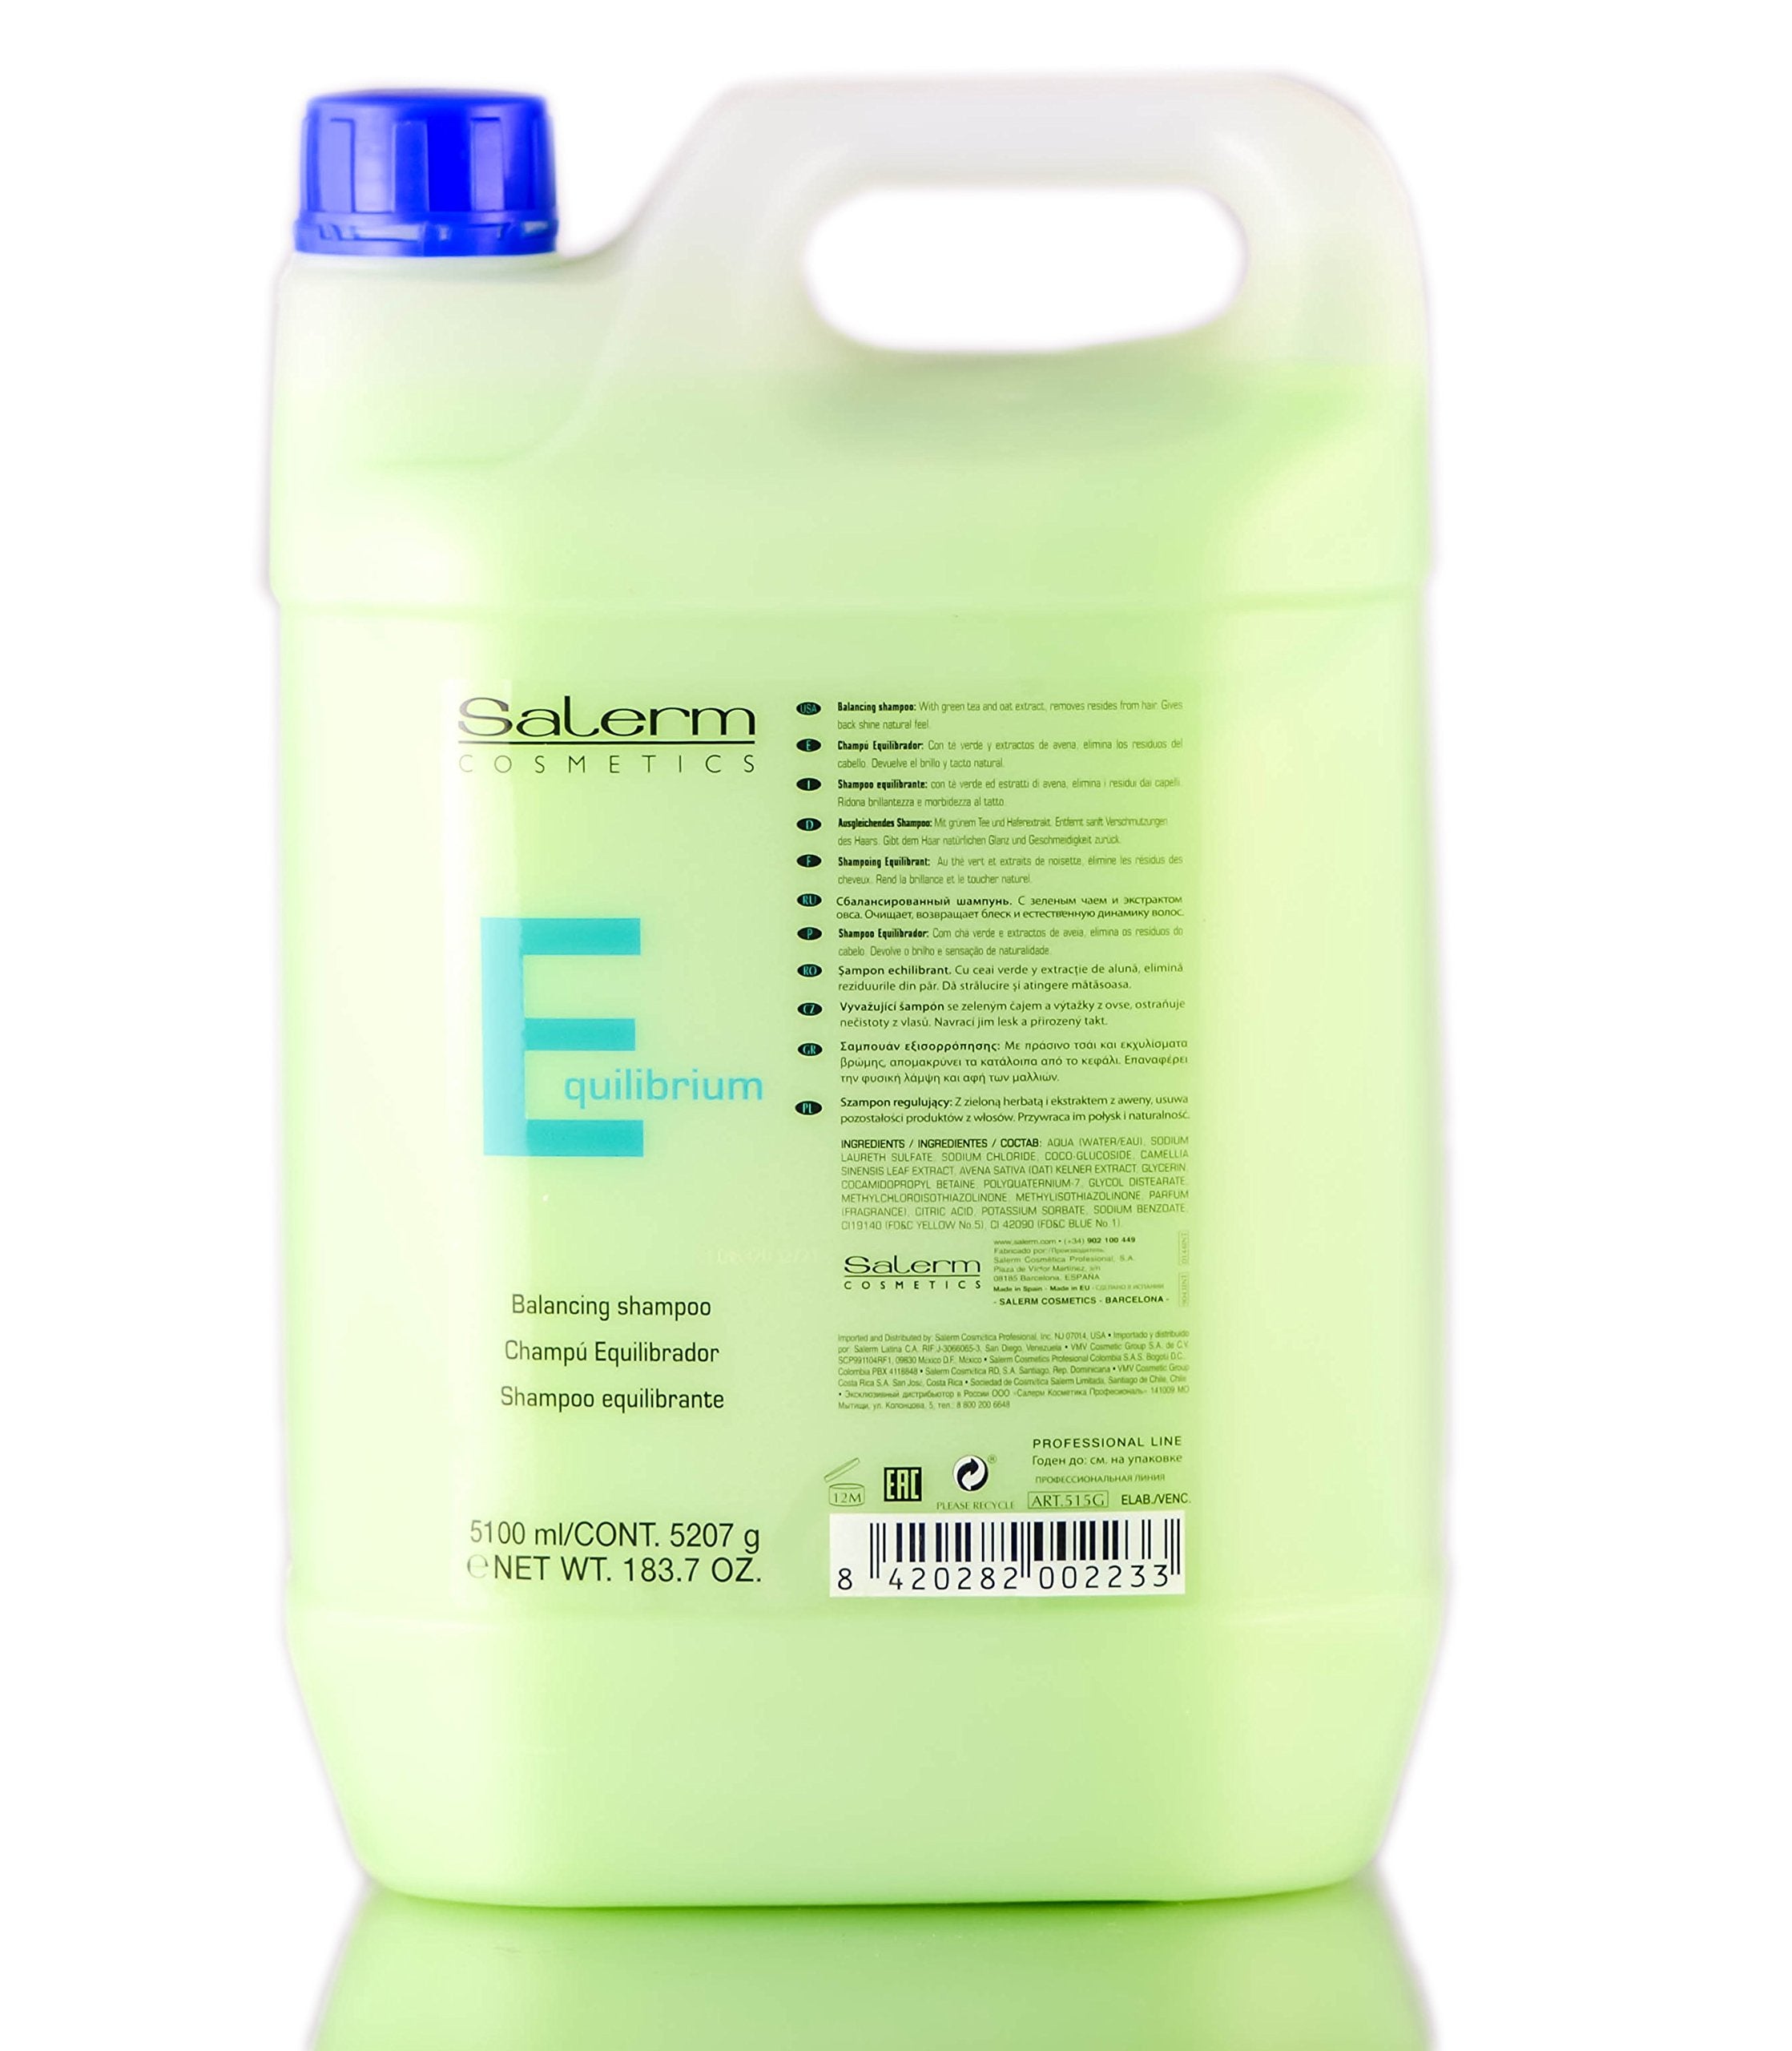 Salerm Cosmetics Equilibrium Balance Shampoo -183.7 oz